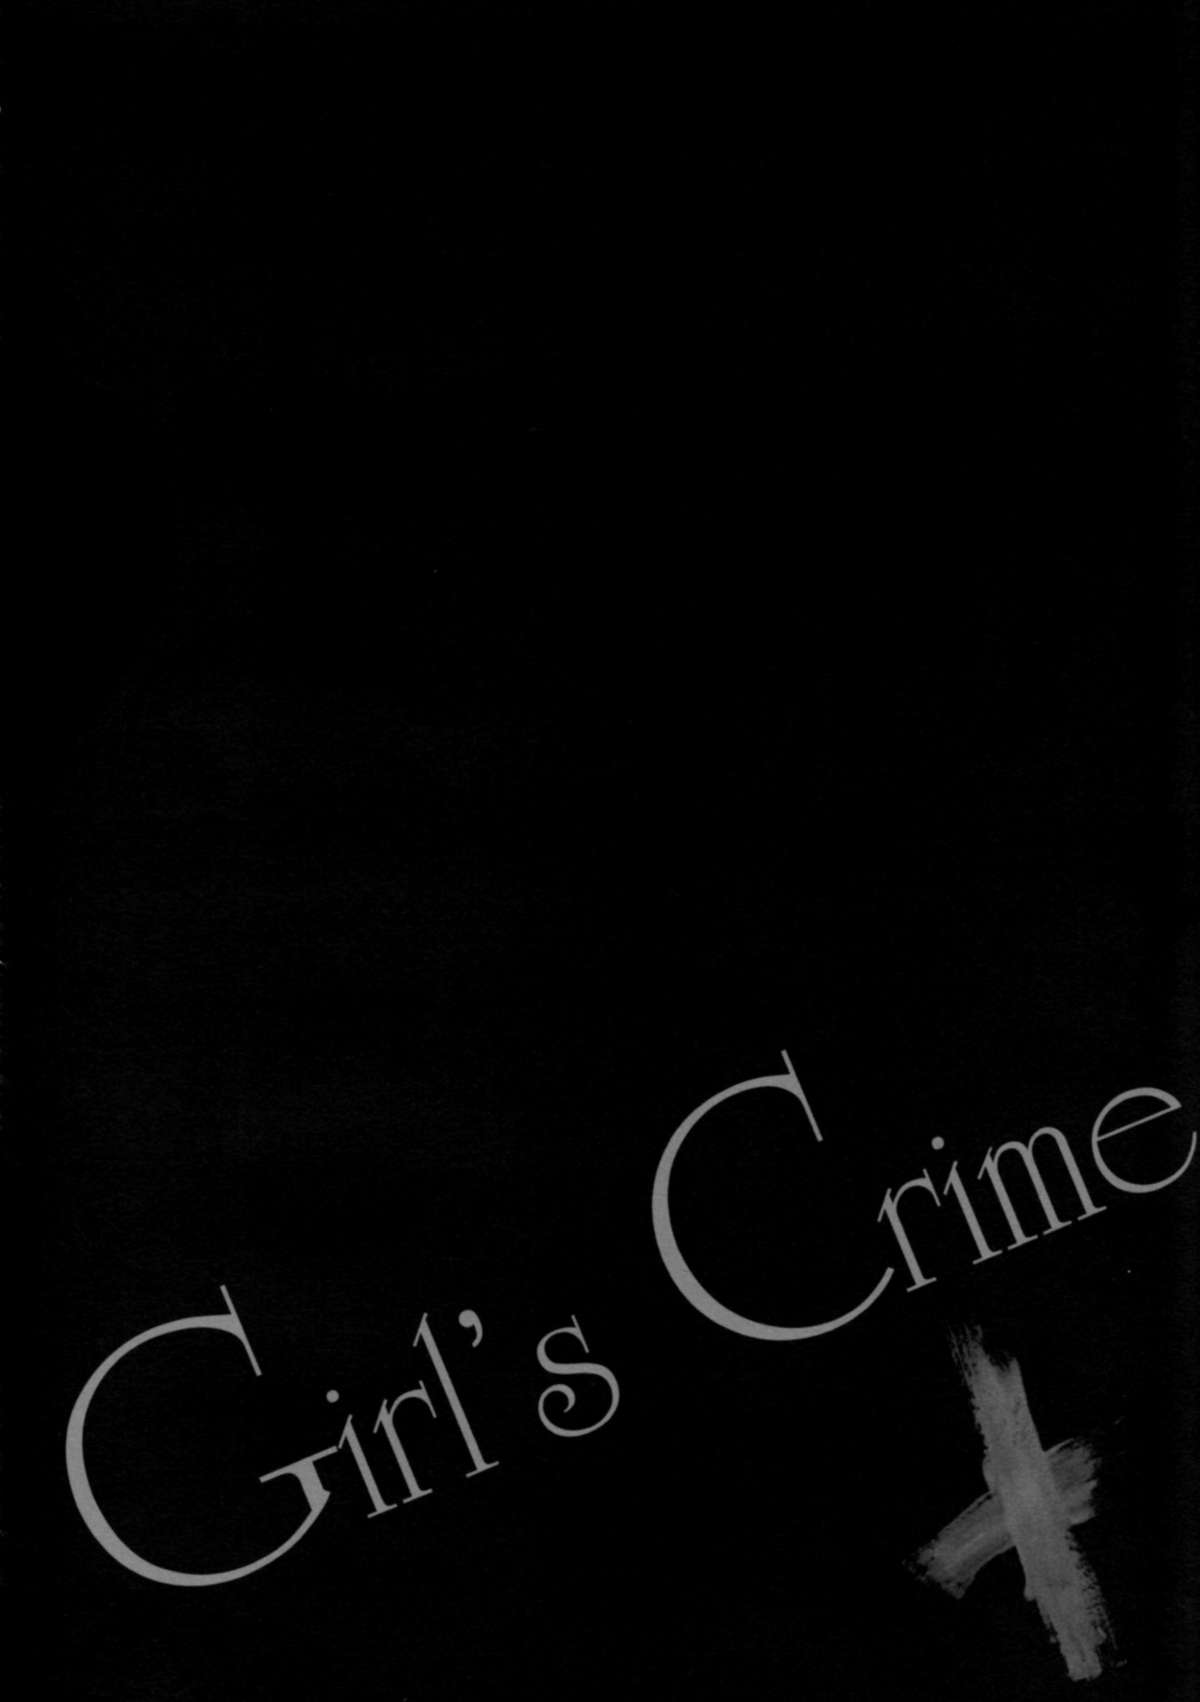 (CSP6) [えねるぎあ (ぴかち)] Girl's Crime (魔法少女まどかマギカ)